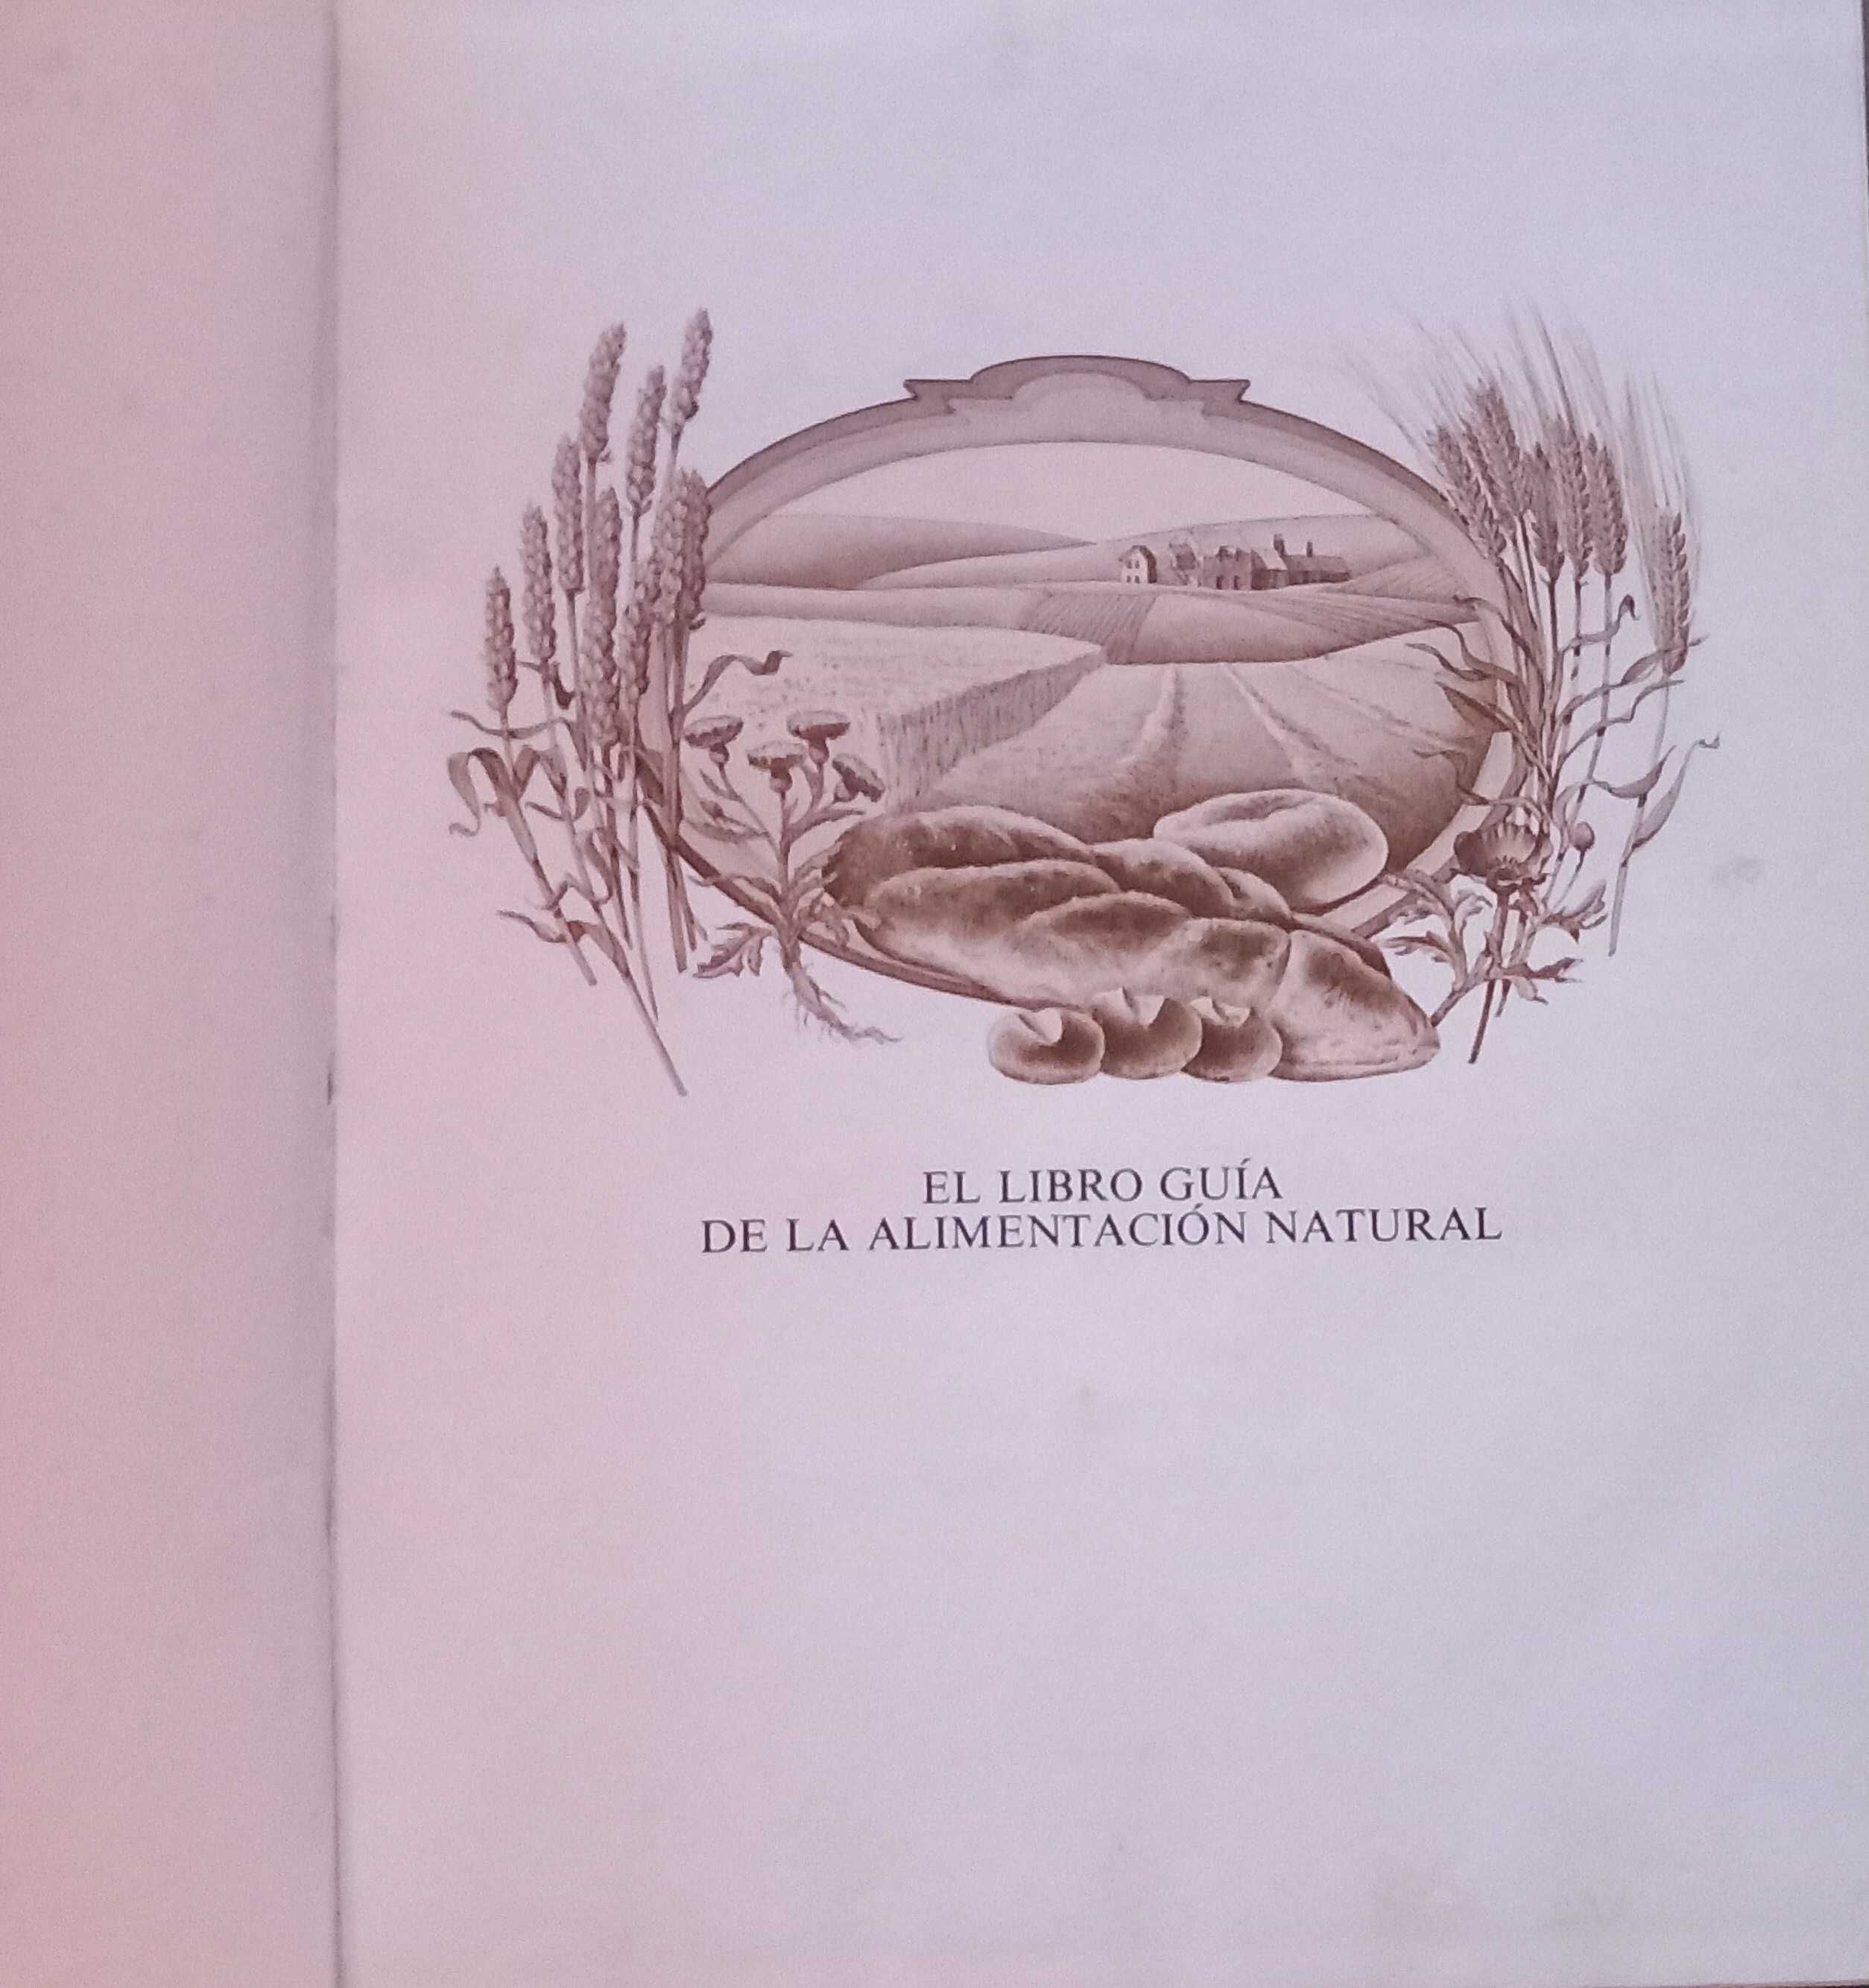 Livro - El libro guia de la Alimentacion Natural de George Seddon